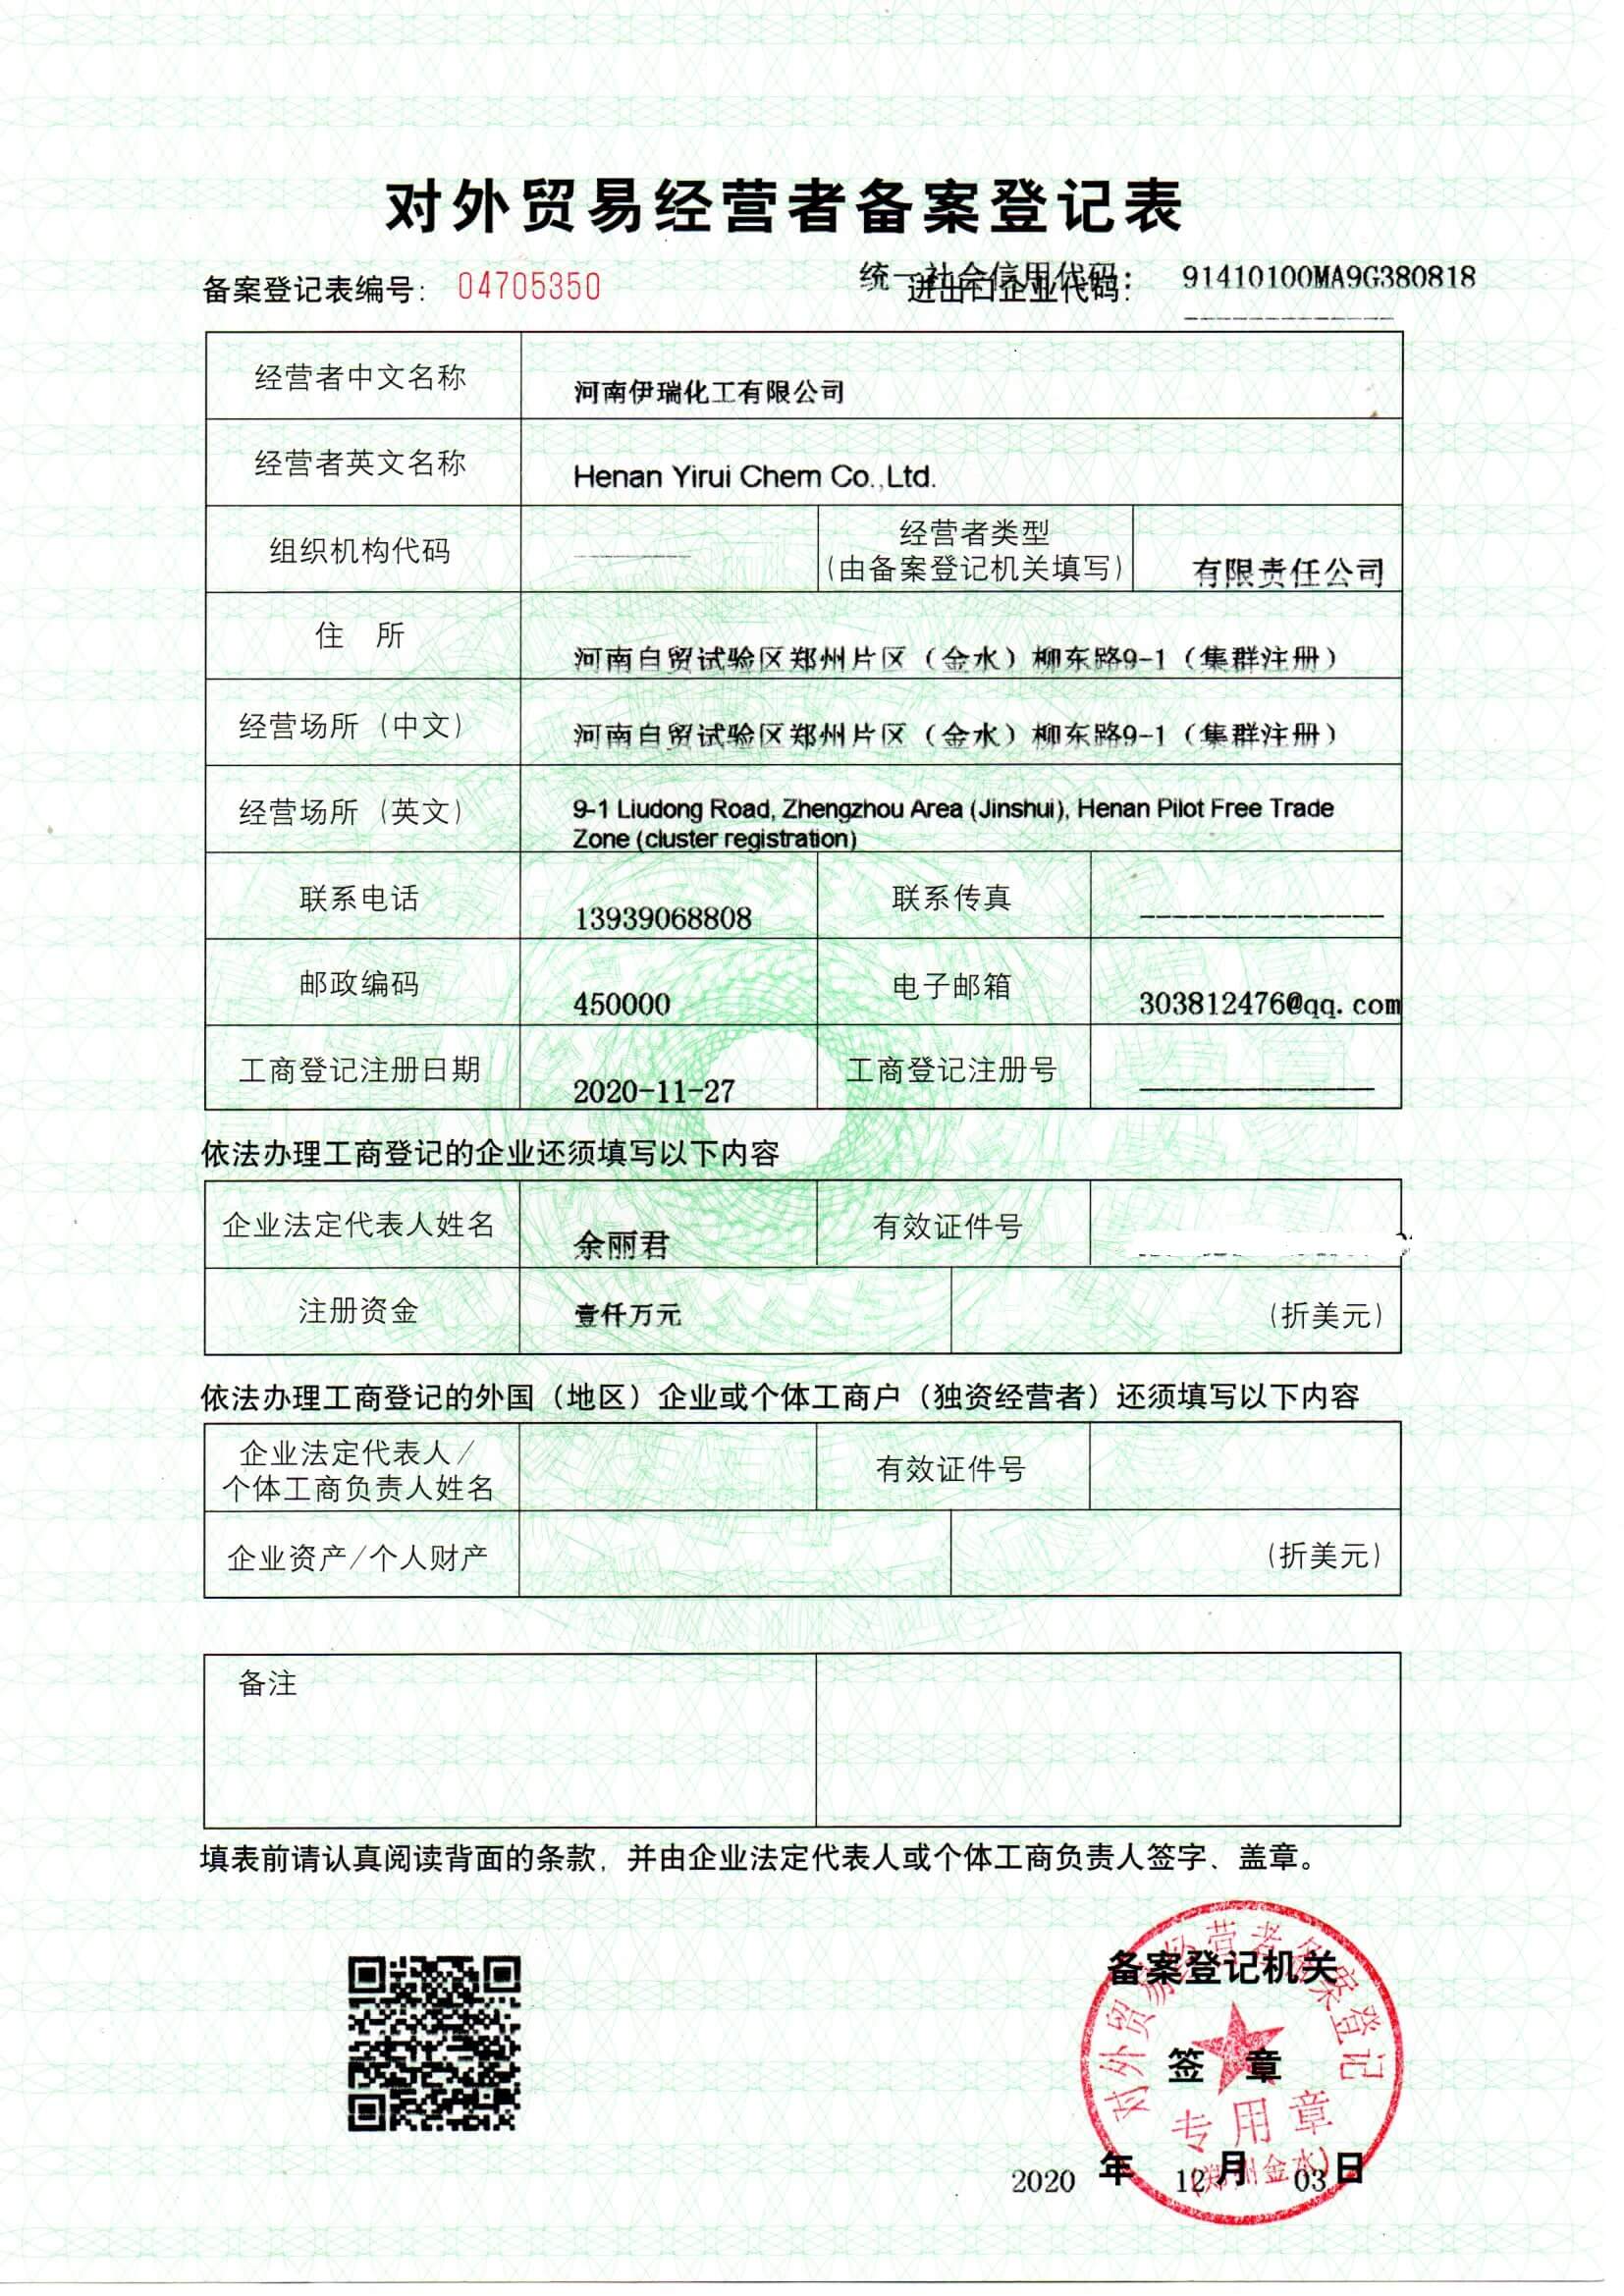 polyaluminium chloride factory export license